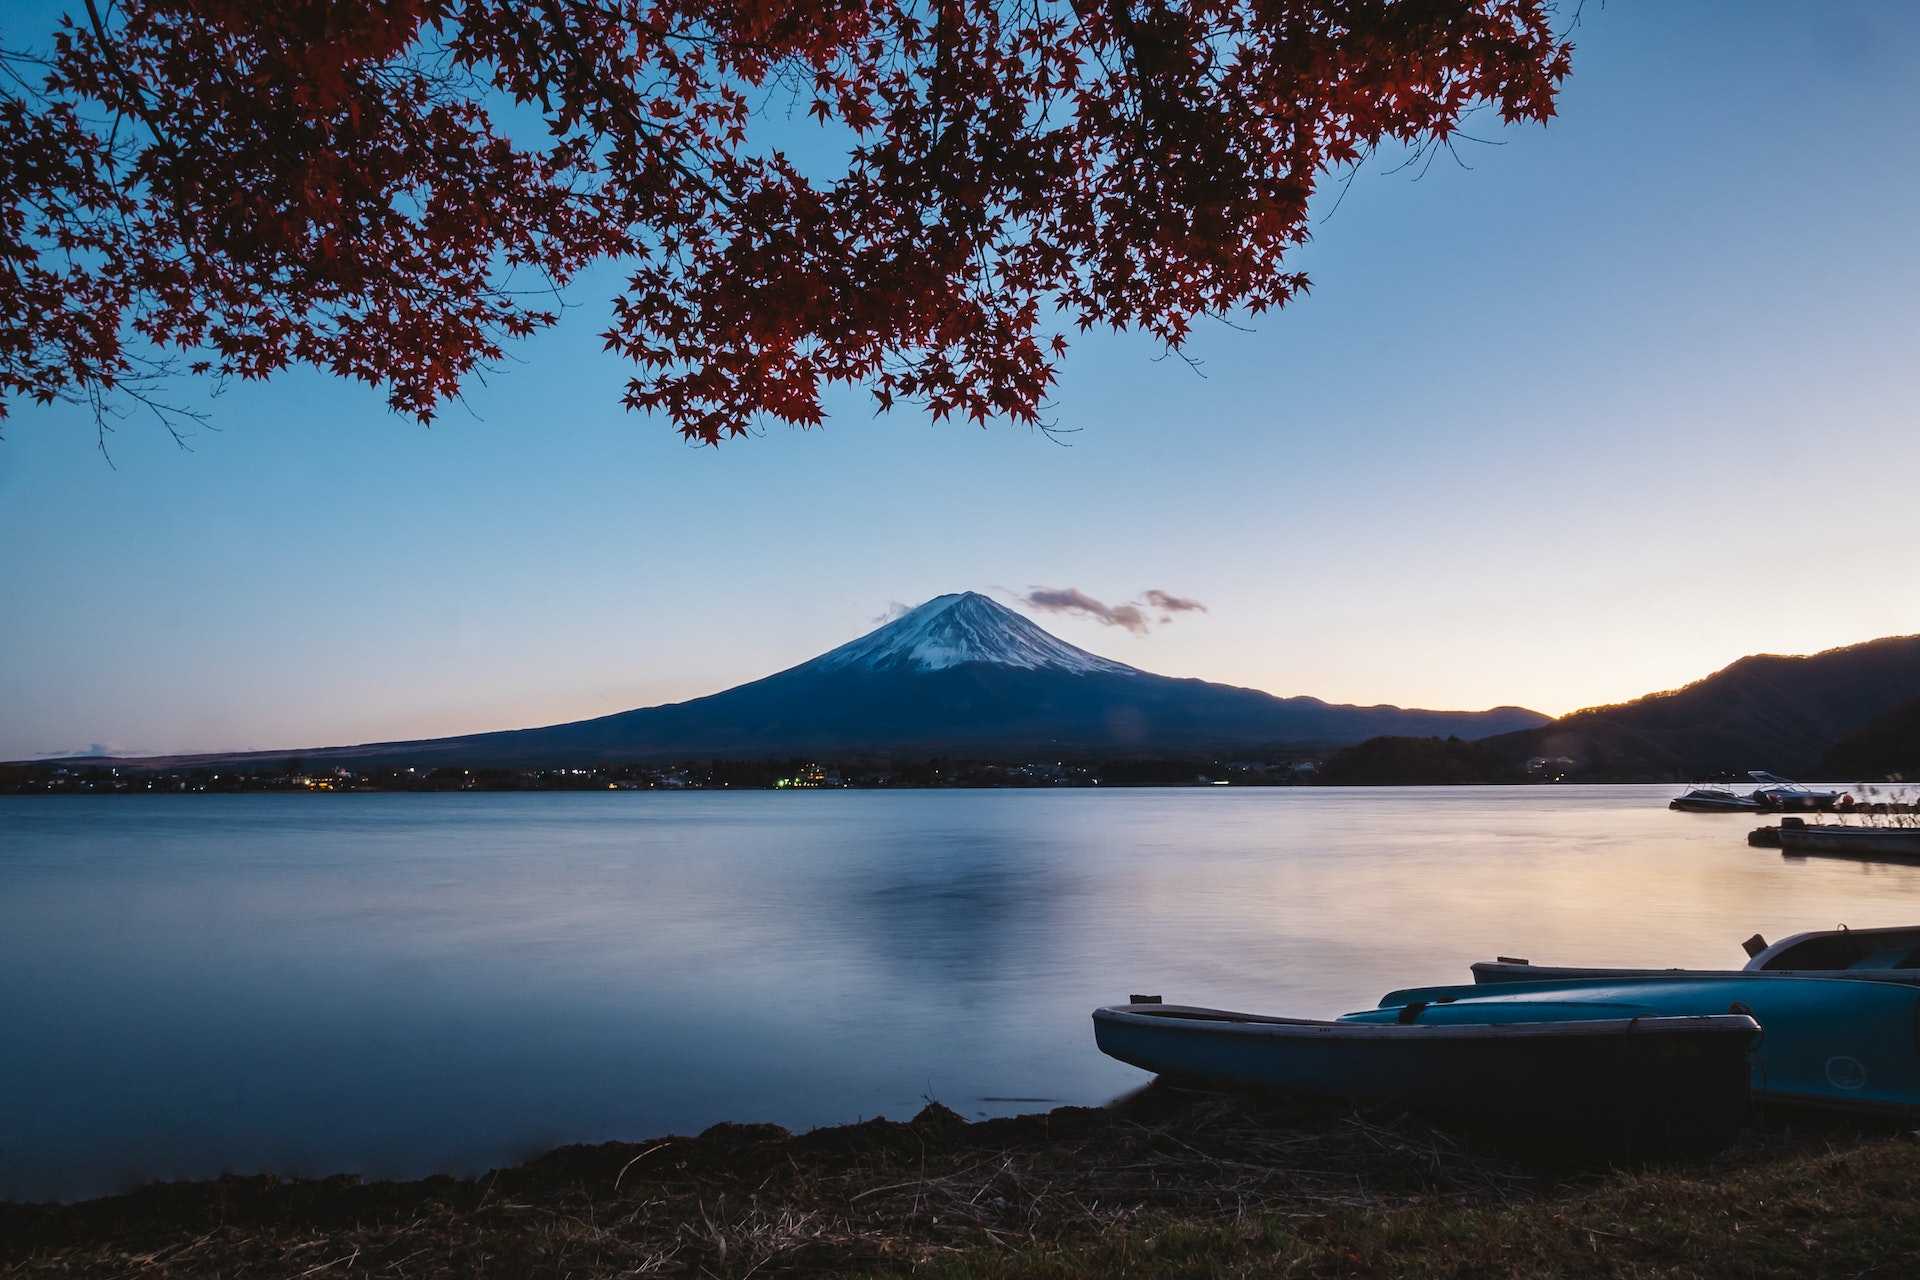 Mountain in the distance across a lake in Fujikawaguchiko, Yamanashi, Japan